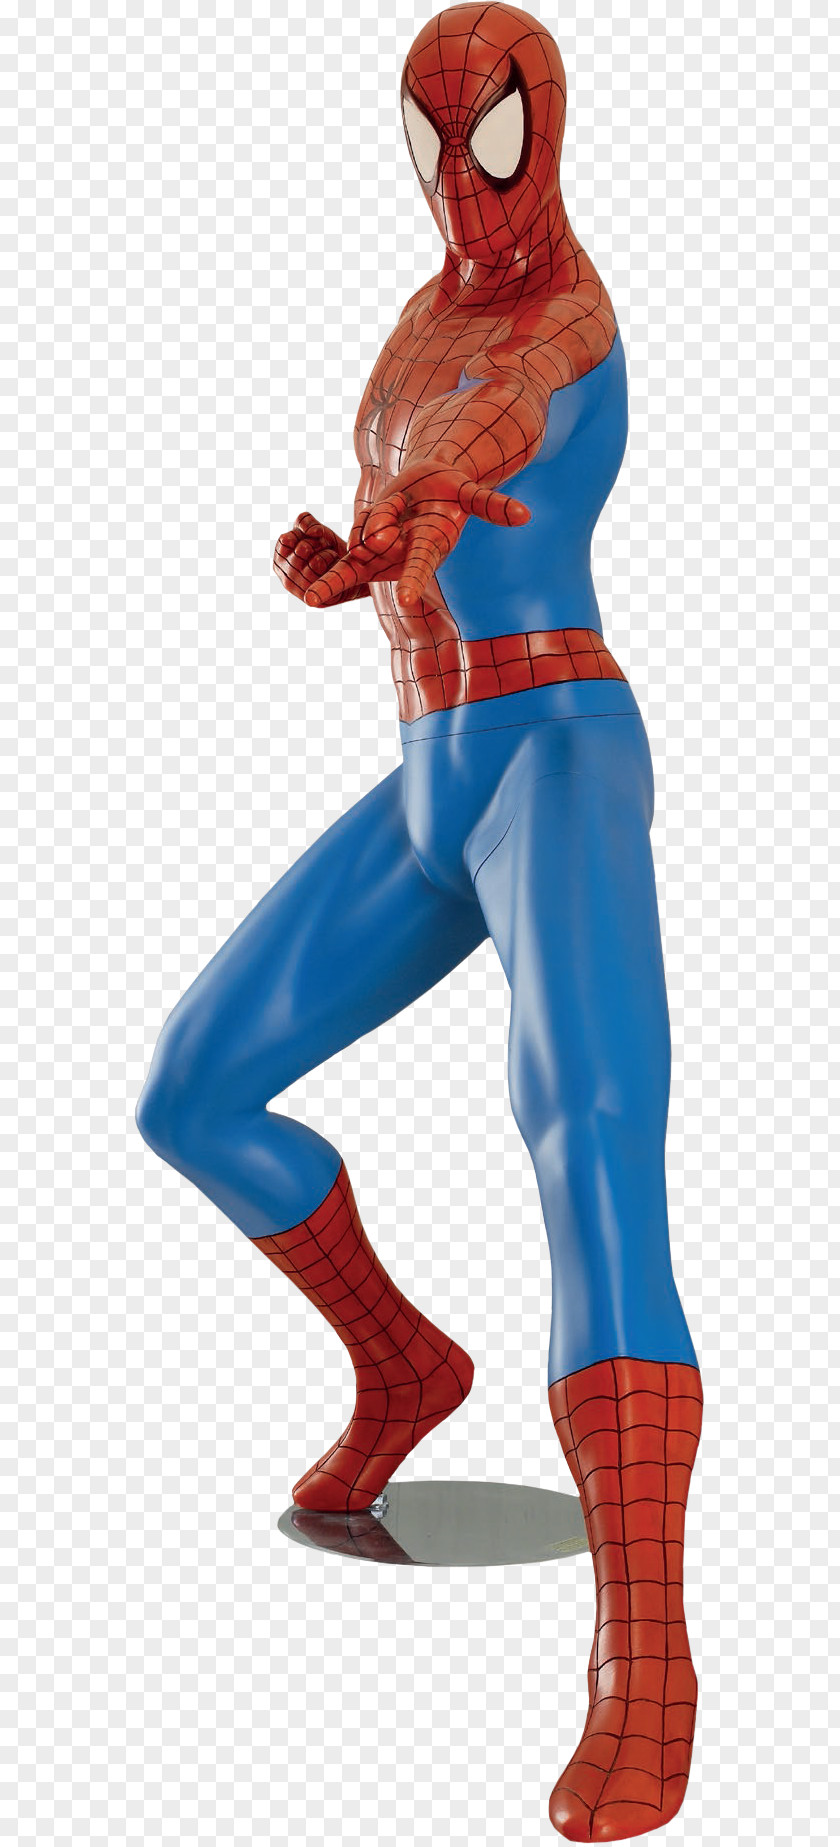 Spiderman Swinging Peter Parker Spider-Man Hulk Rocket Raccoon Thor Comics PNG